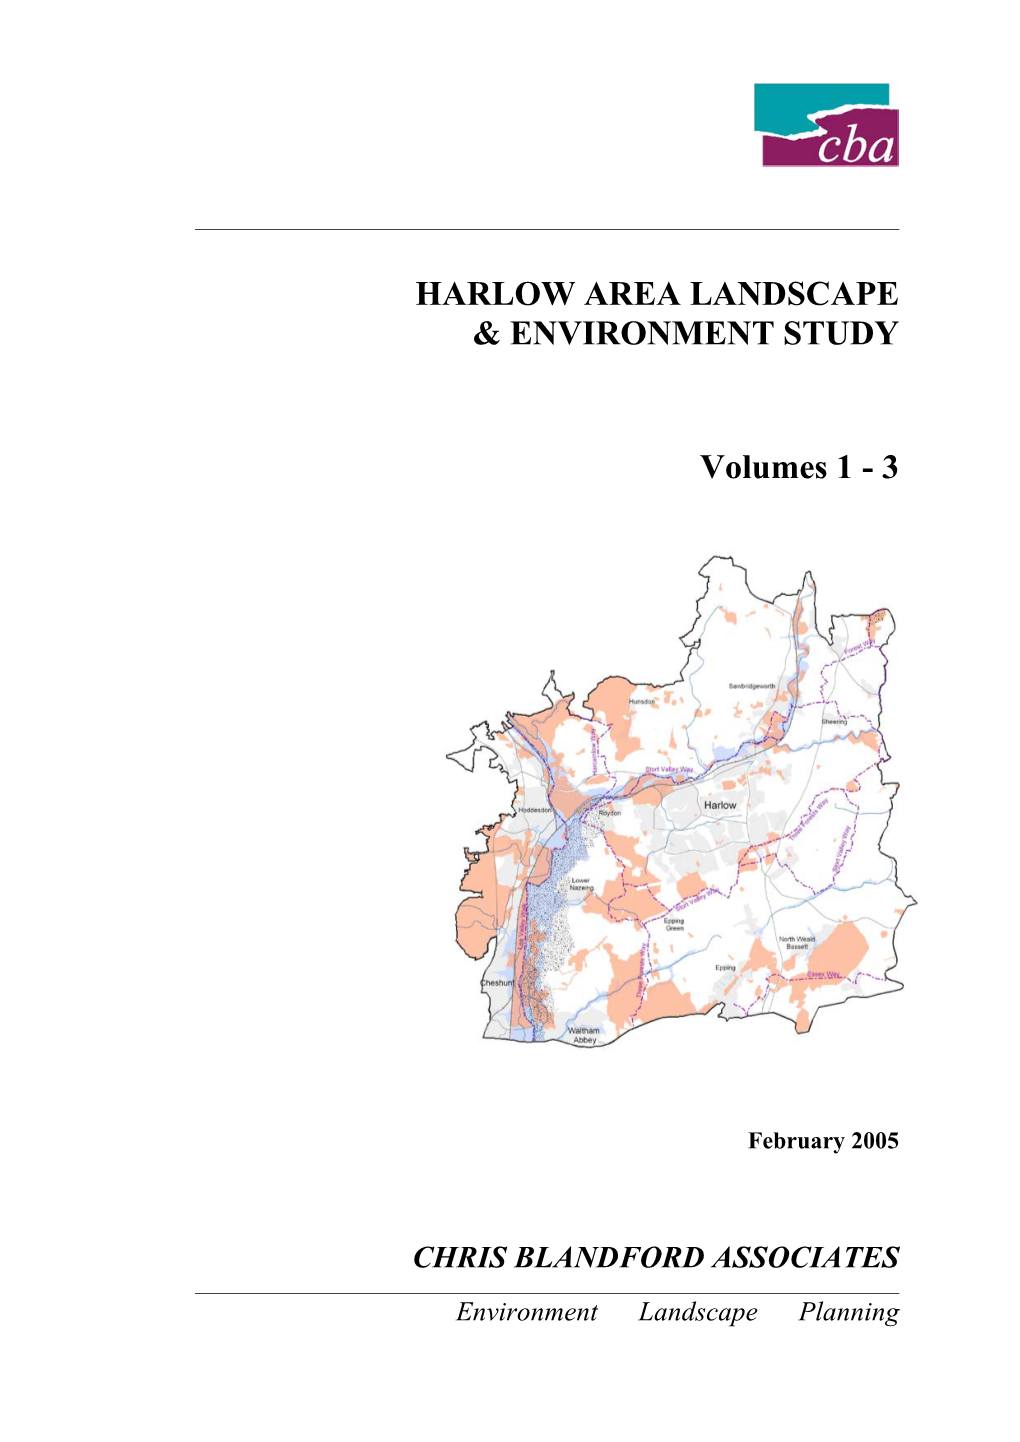 HARLOW AREA LANDSCAPE & ENVIRONMENT STUDY Volumes 1